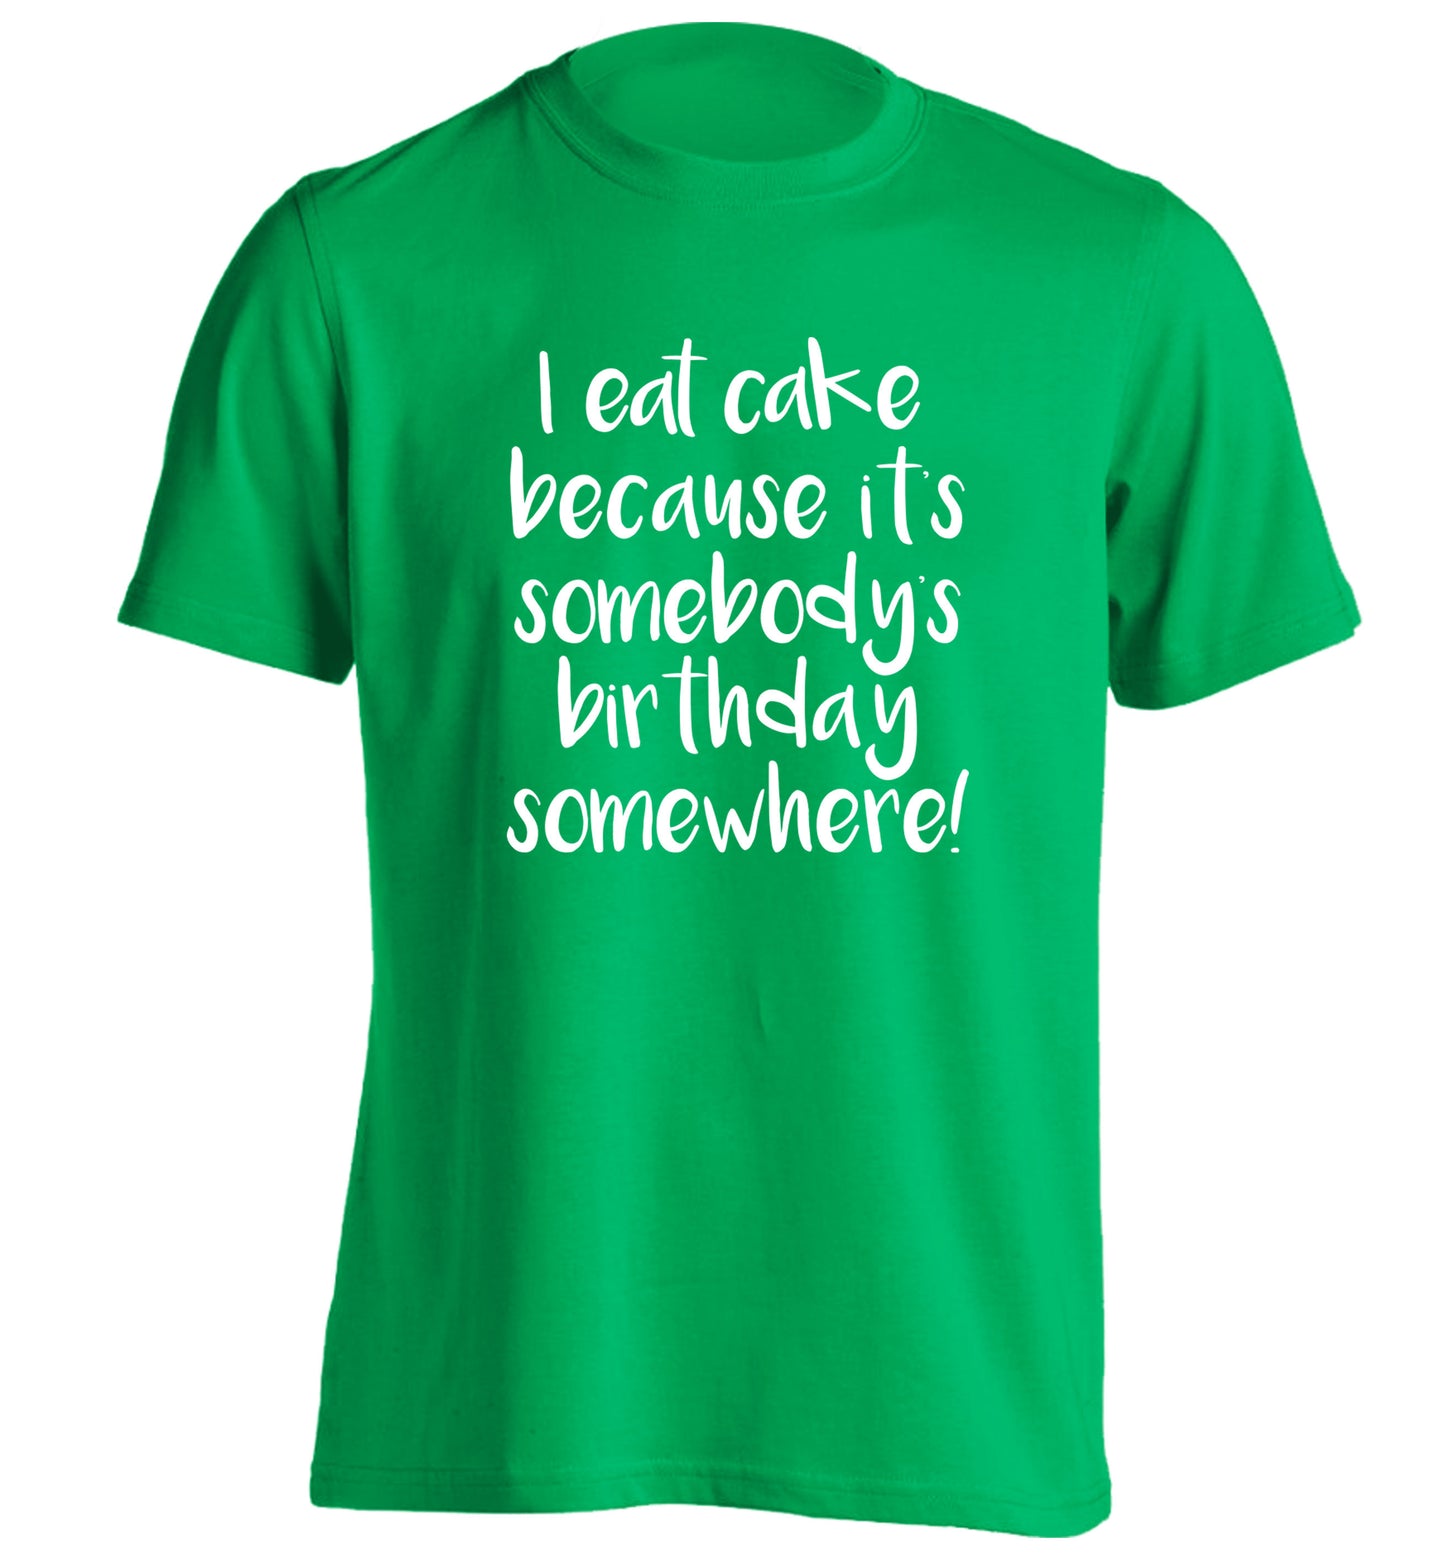 I eat cake because it's somebody's birthday somewhere! adults unisex green Tshirt 2XL